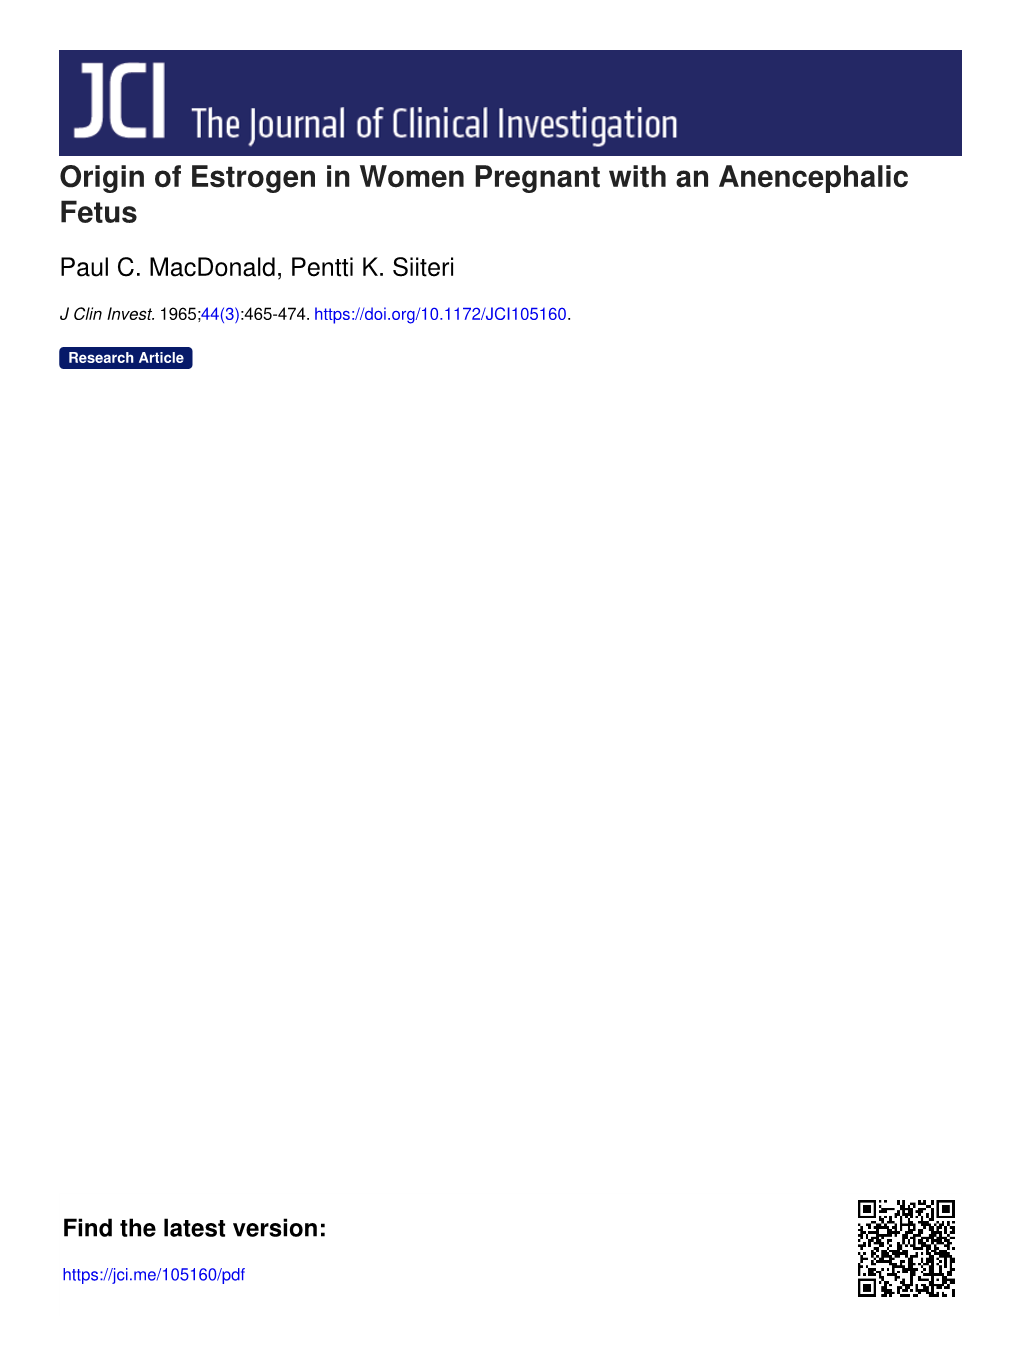 Origin of Estrogen in Women Pregnant with an Anencephalic Fetus